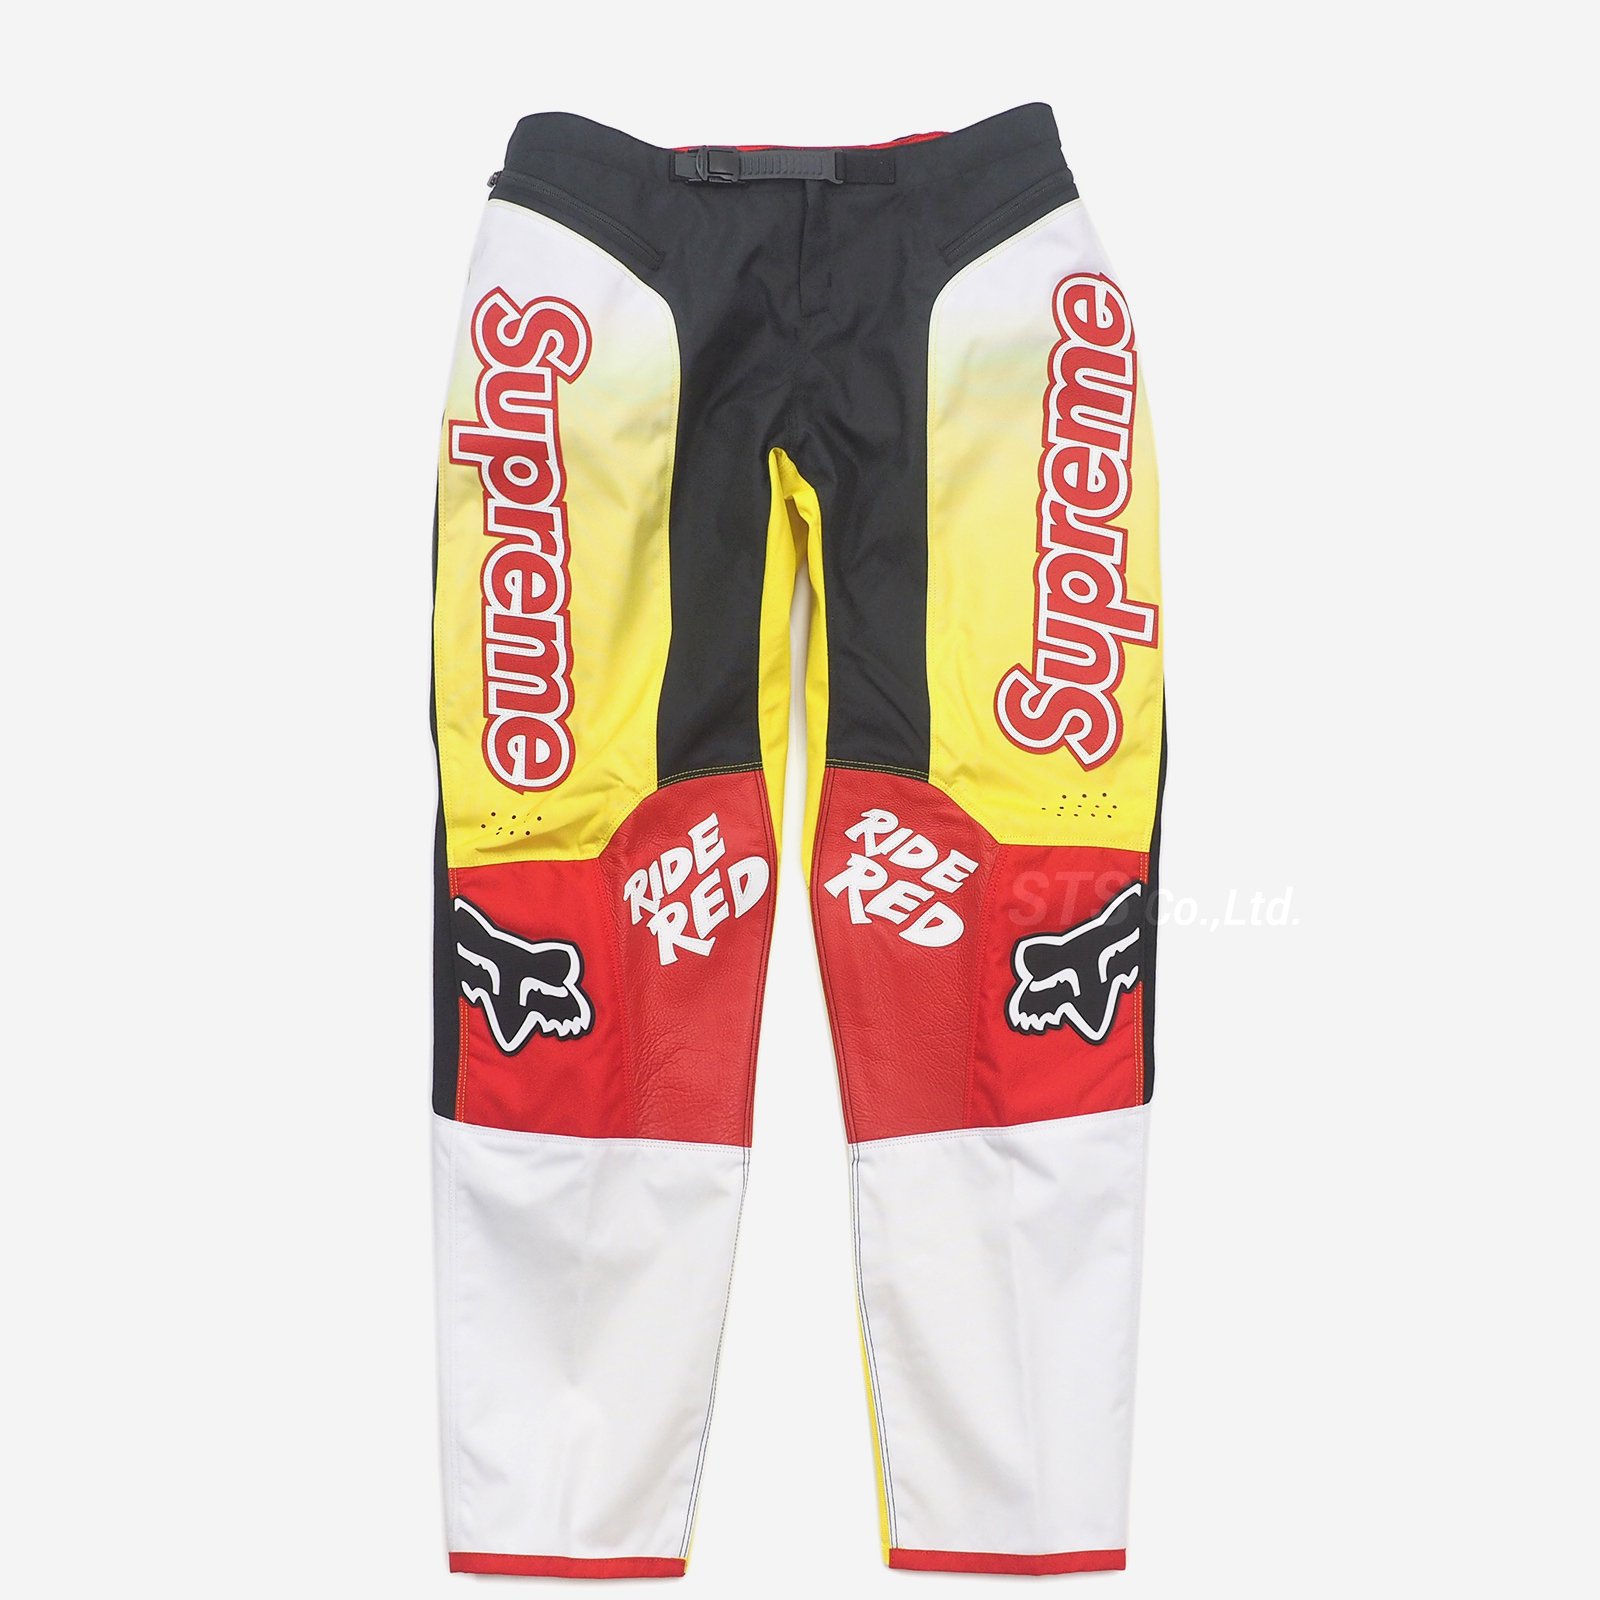 Supreme/Honda/Fox Racing Moto Pant ParkSIDER